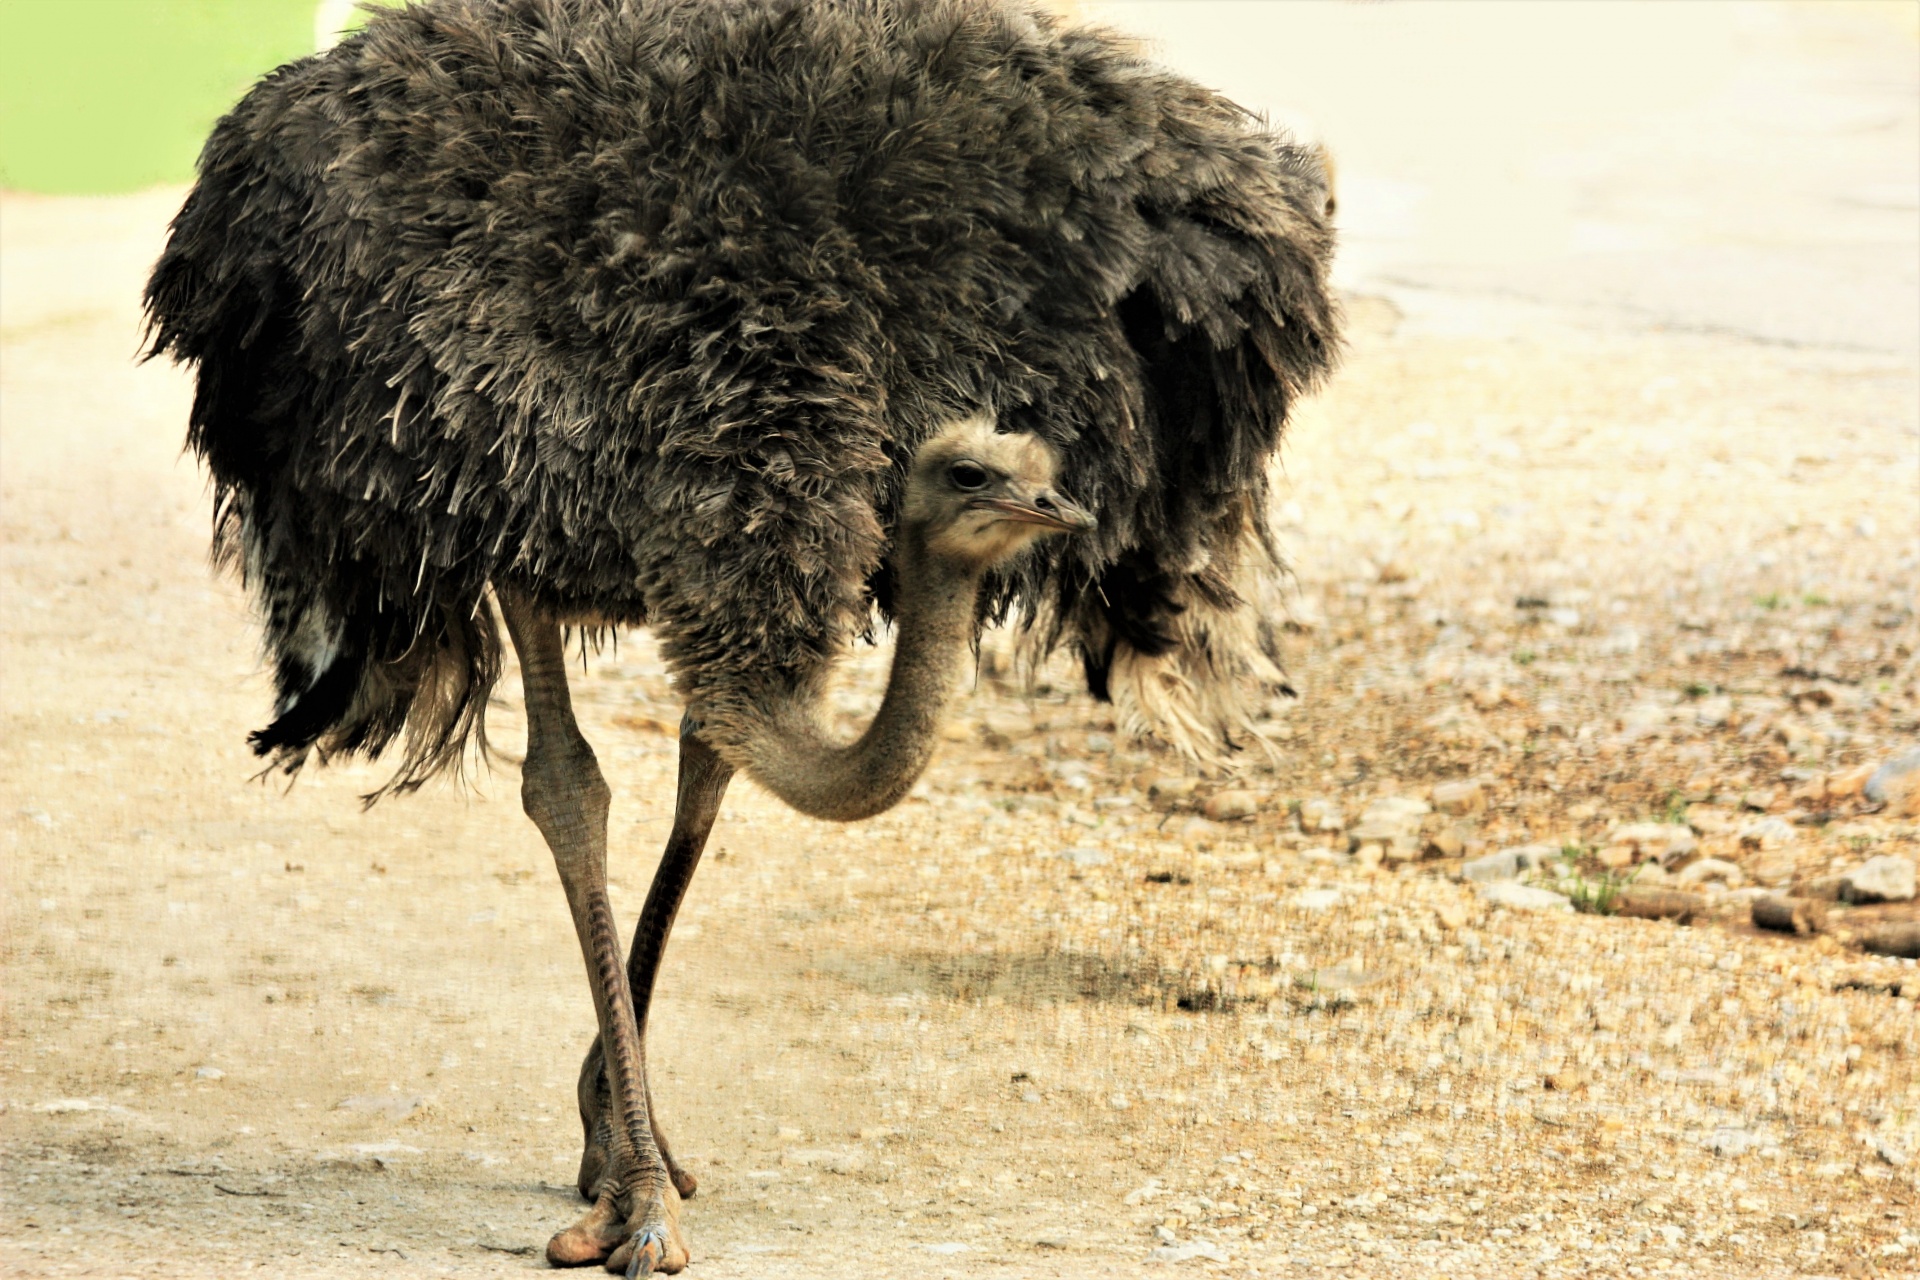 Ostrich Walking On Road